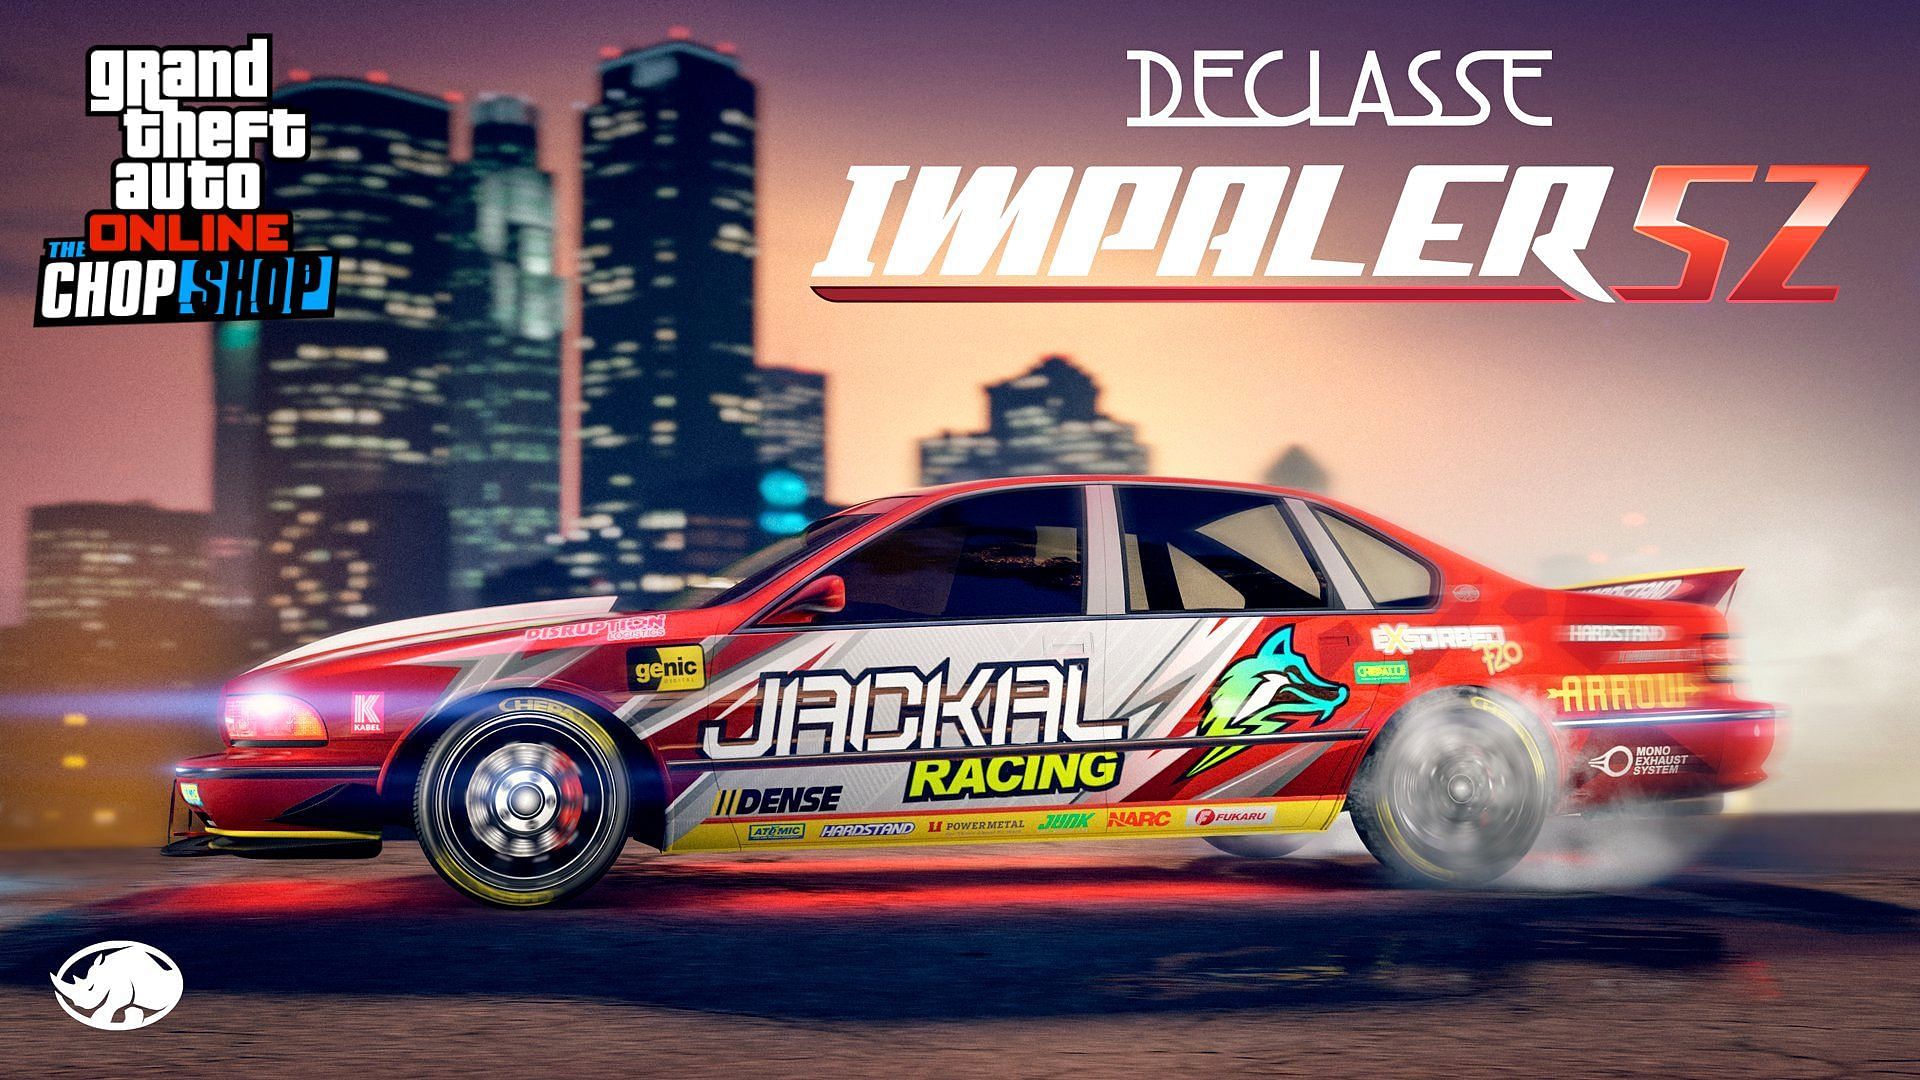 The new Declasse Impaler SZ is incompatible with GTA Online Drag Races (Image via Rockstar Games)